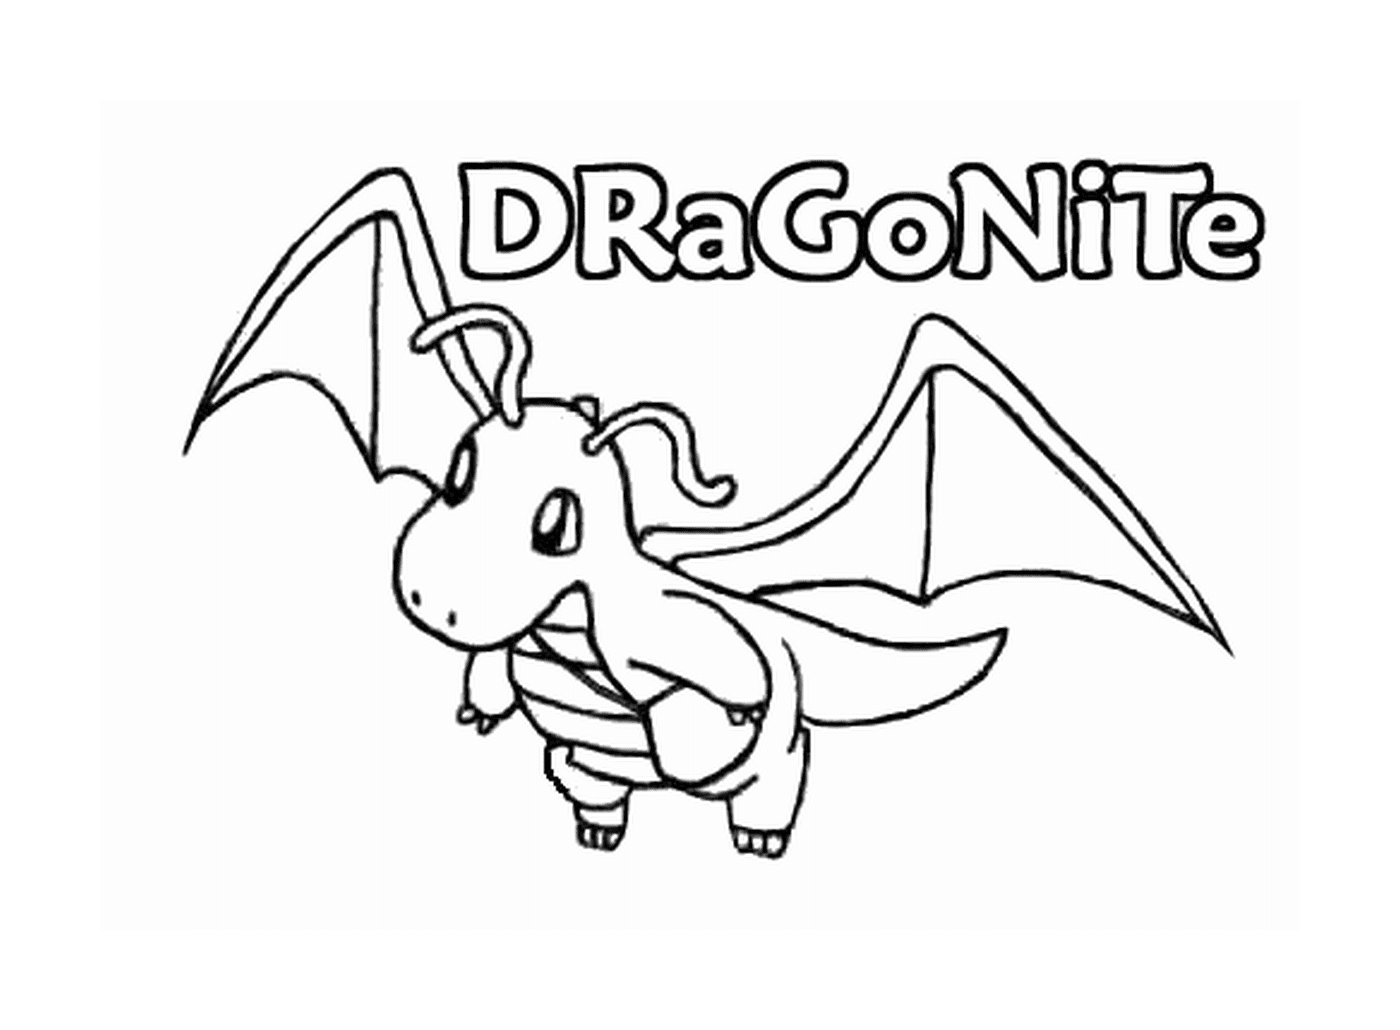  Dragonite: Kraftvoller fliegender Drache 